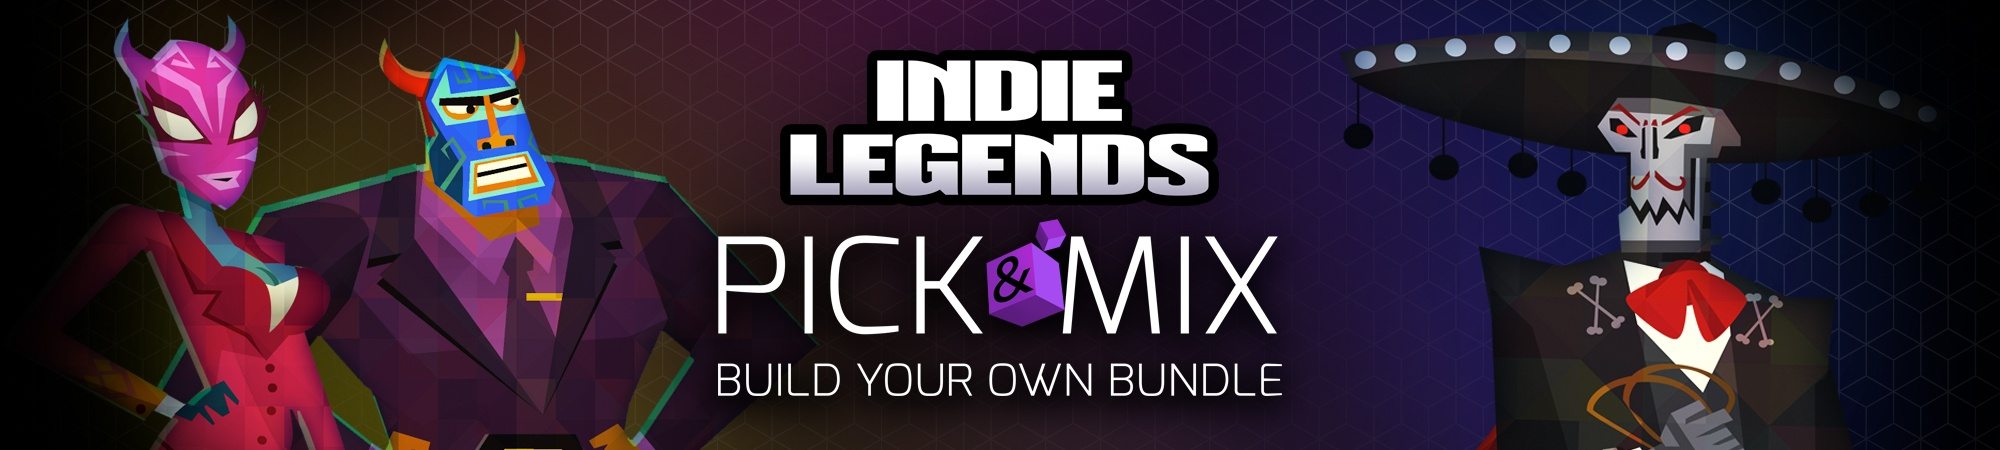 Bundle Stars Indie Legends Pick & Mix